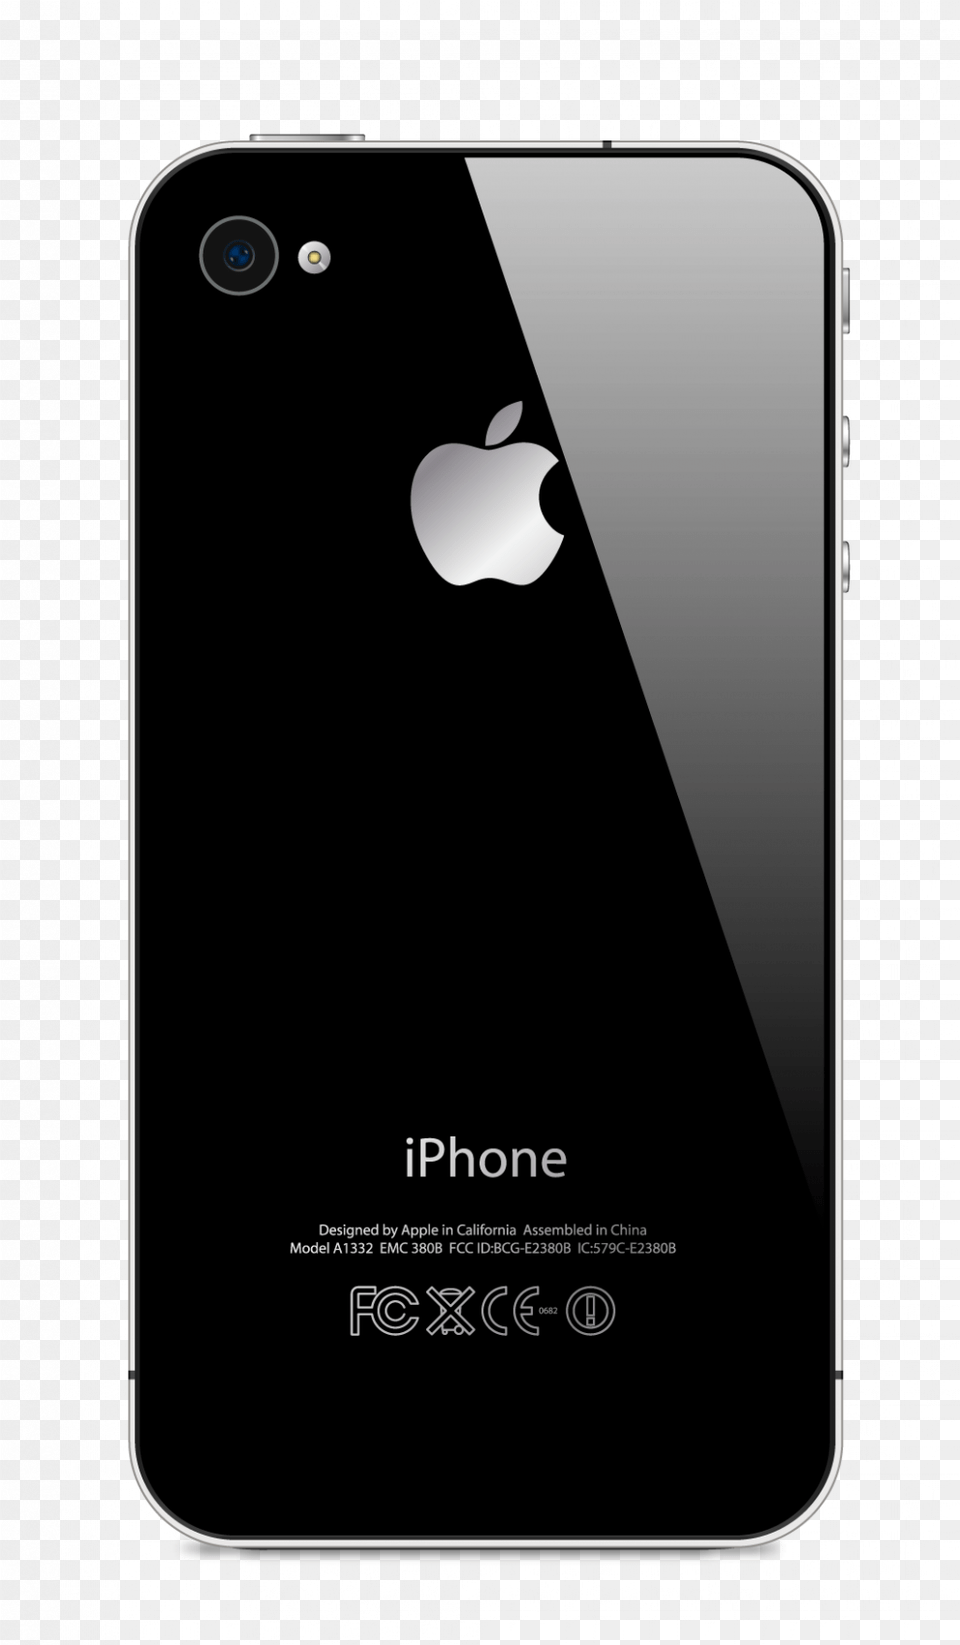 Apple Iphone Image Transparent U2013 Lux Picsart I Phone, Electronics, Mobile Phone Png